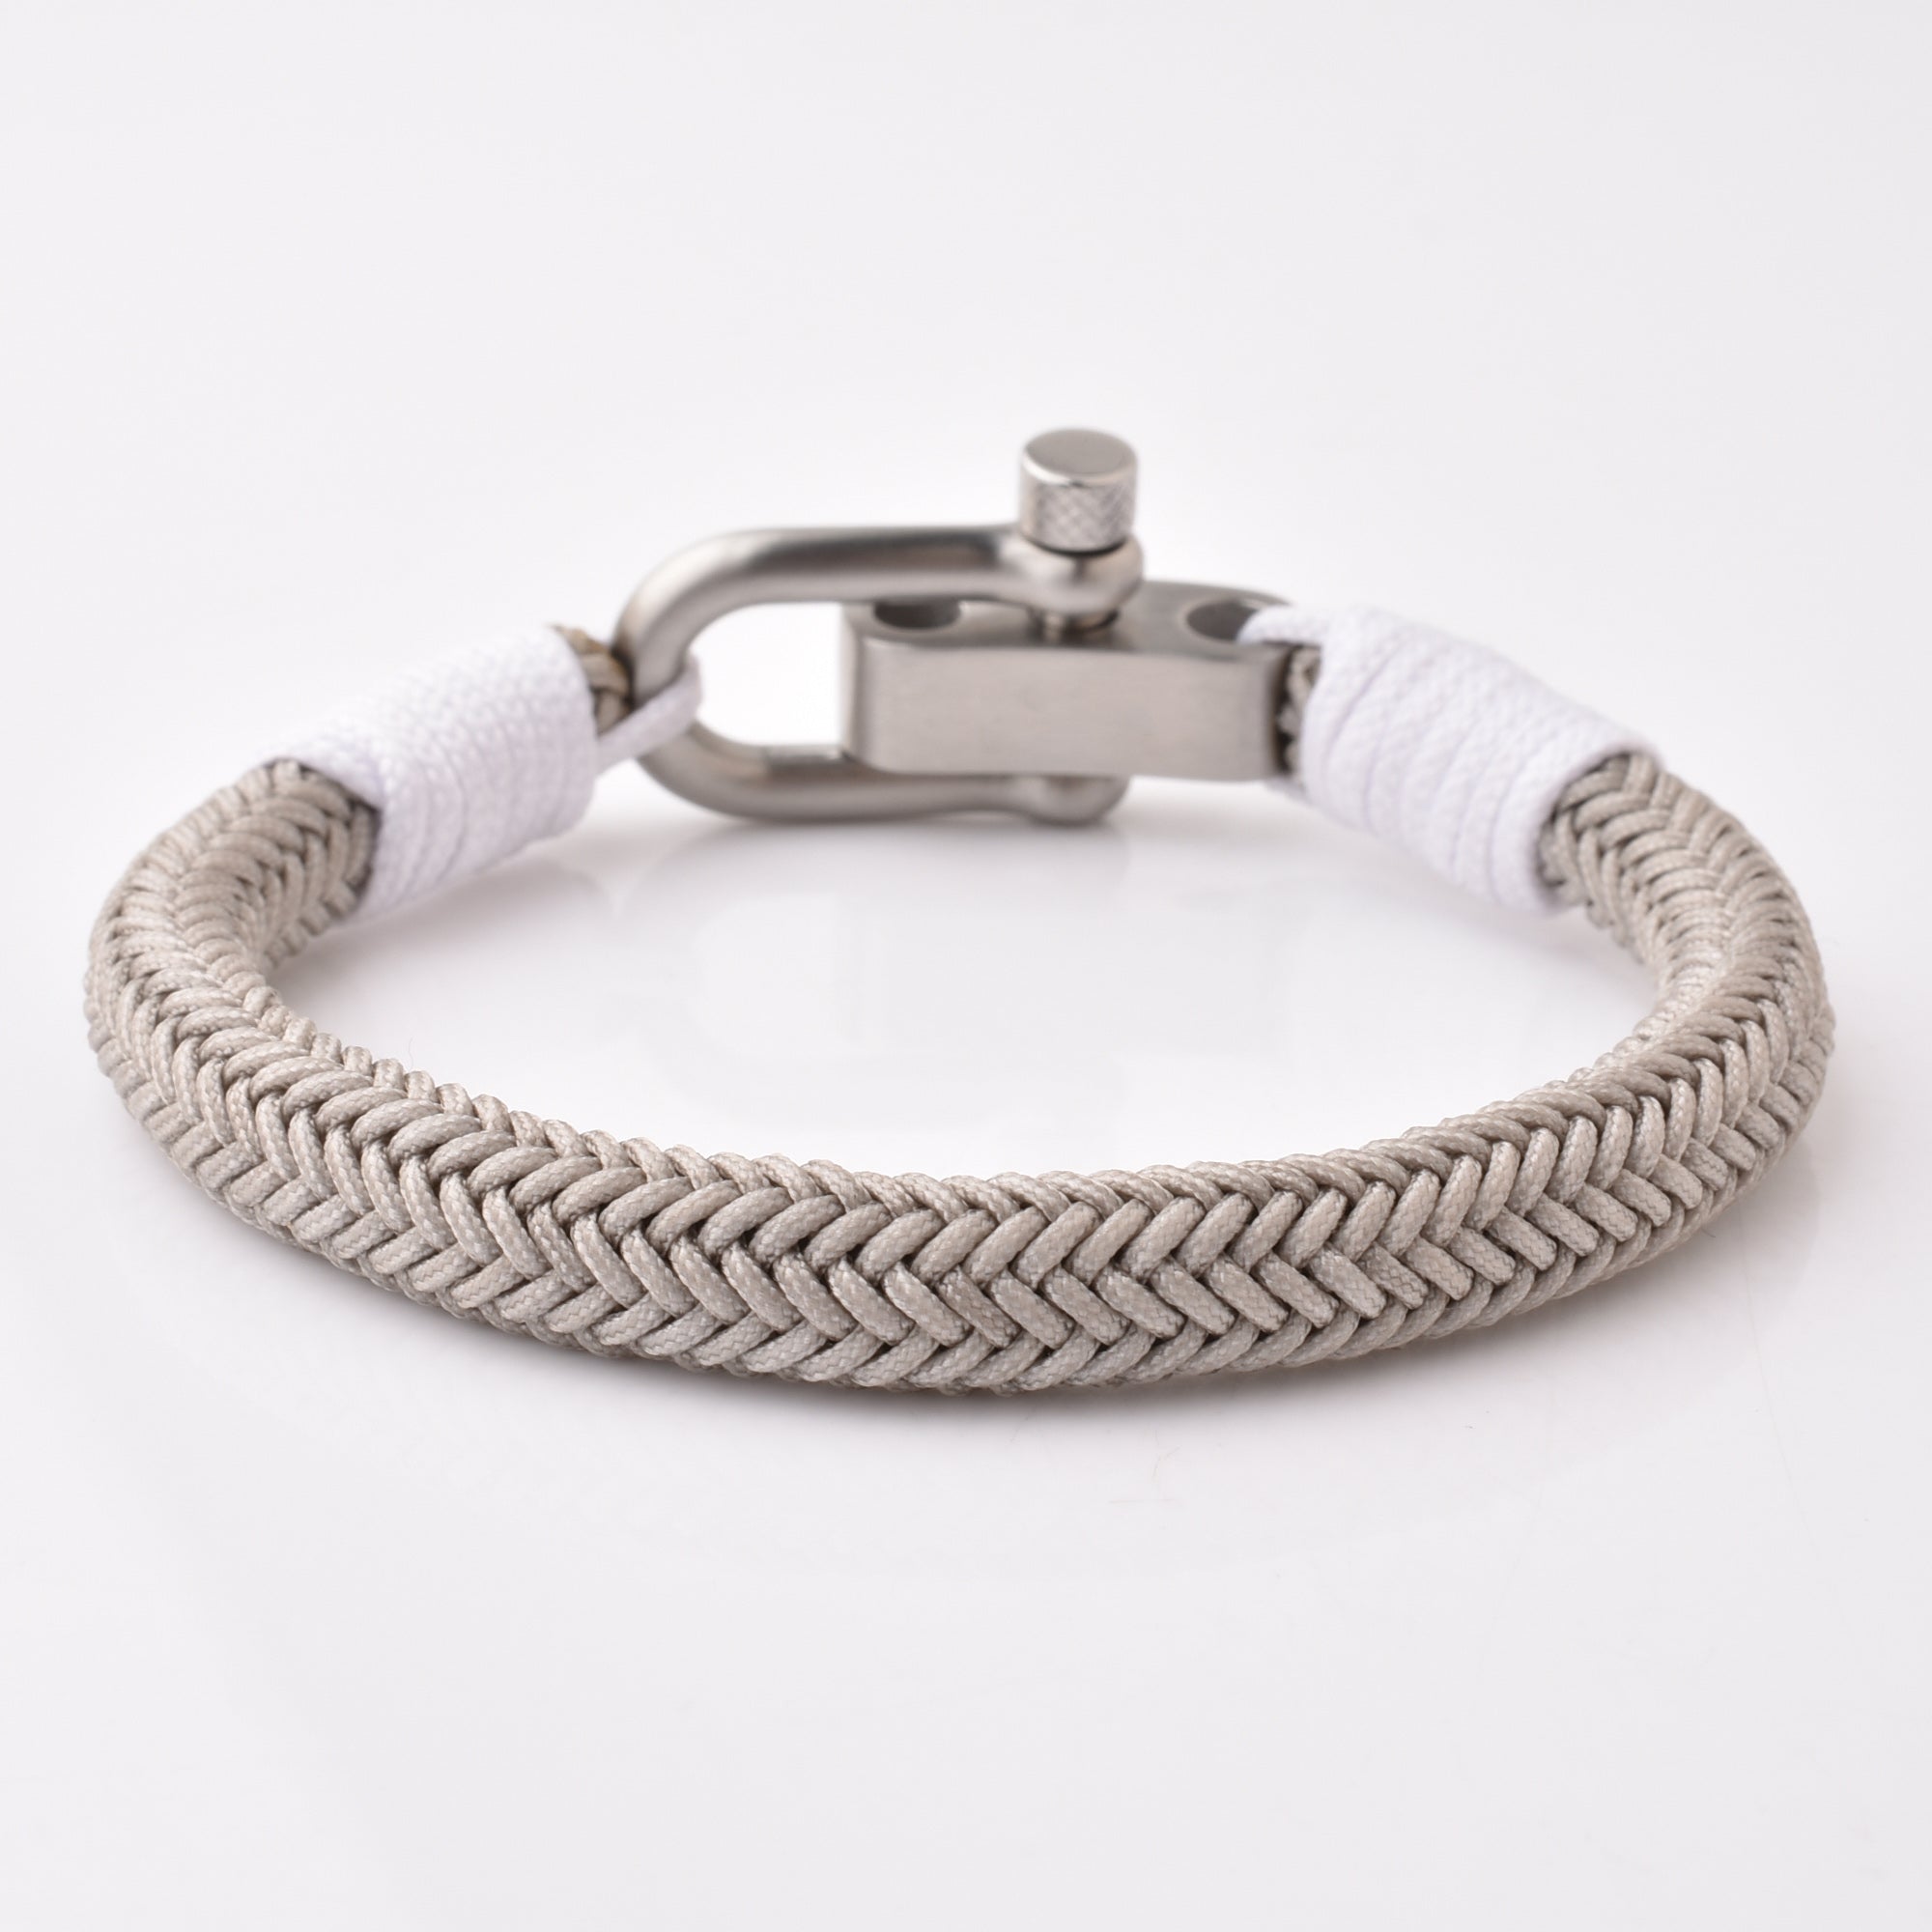 Bracelet corde en acier inoxydable et argent brossé